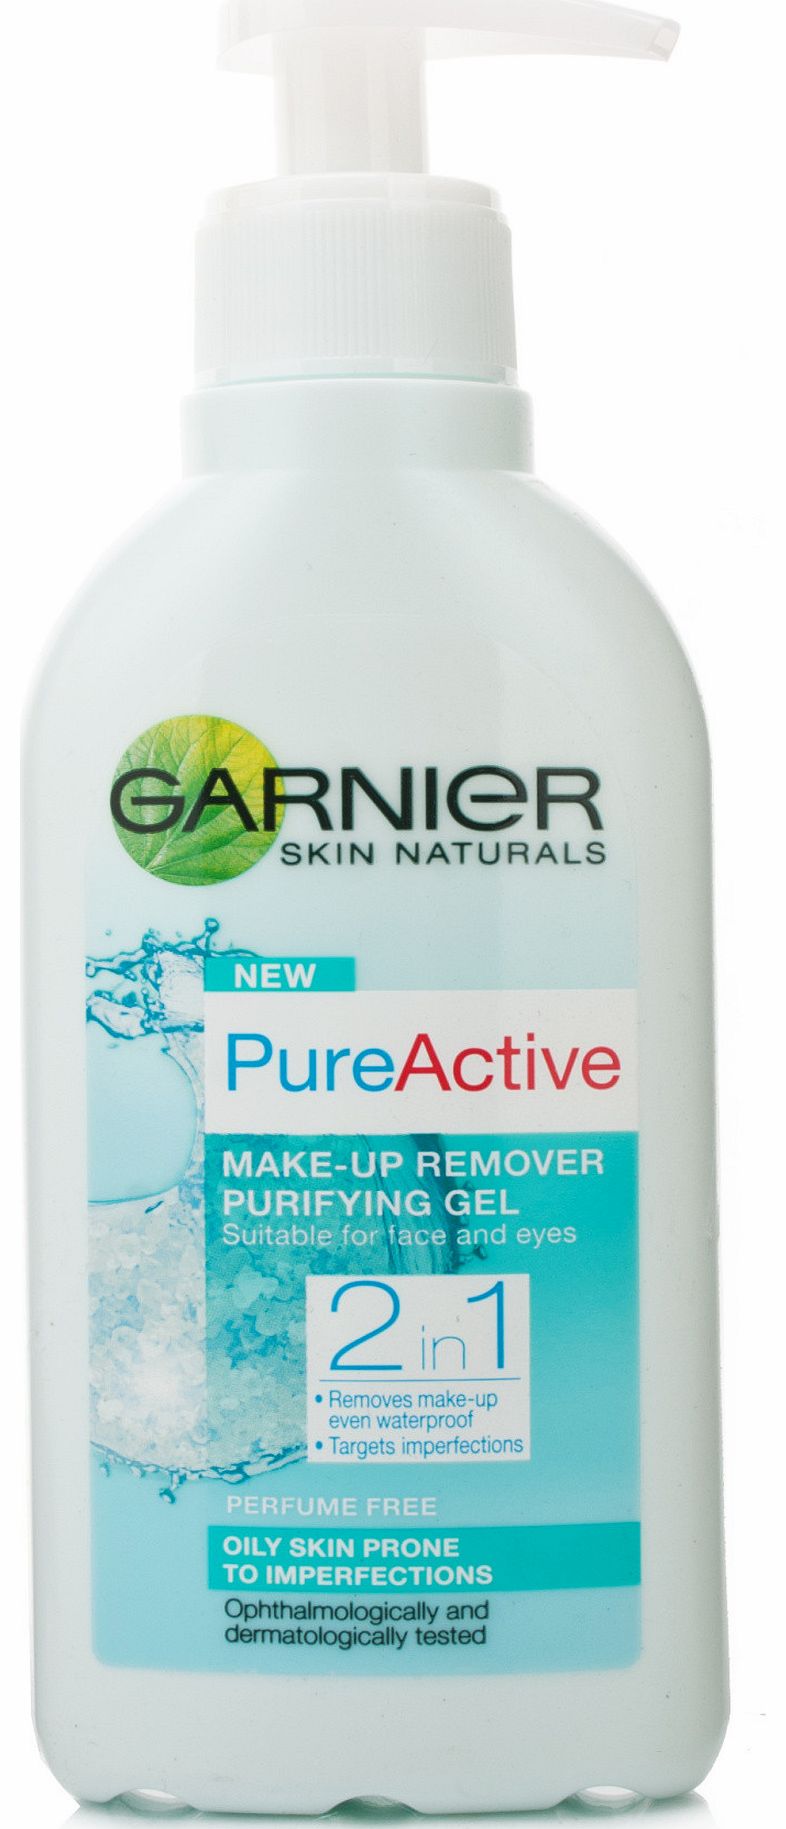 Garnier Pure Active 2 in 1 Make Up Remover Gel